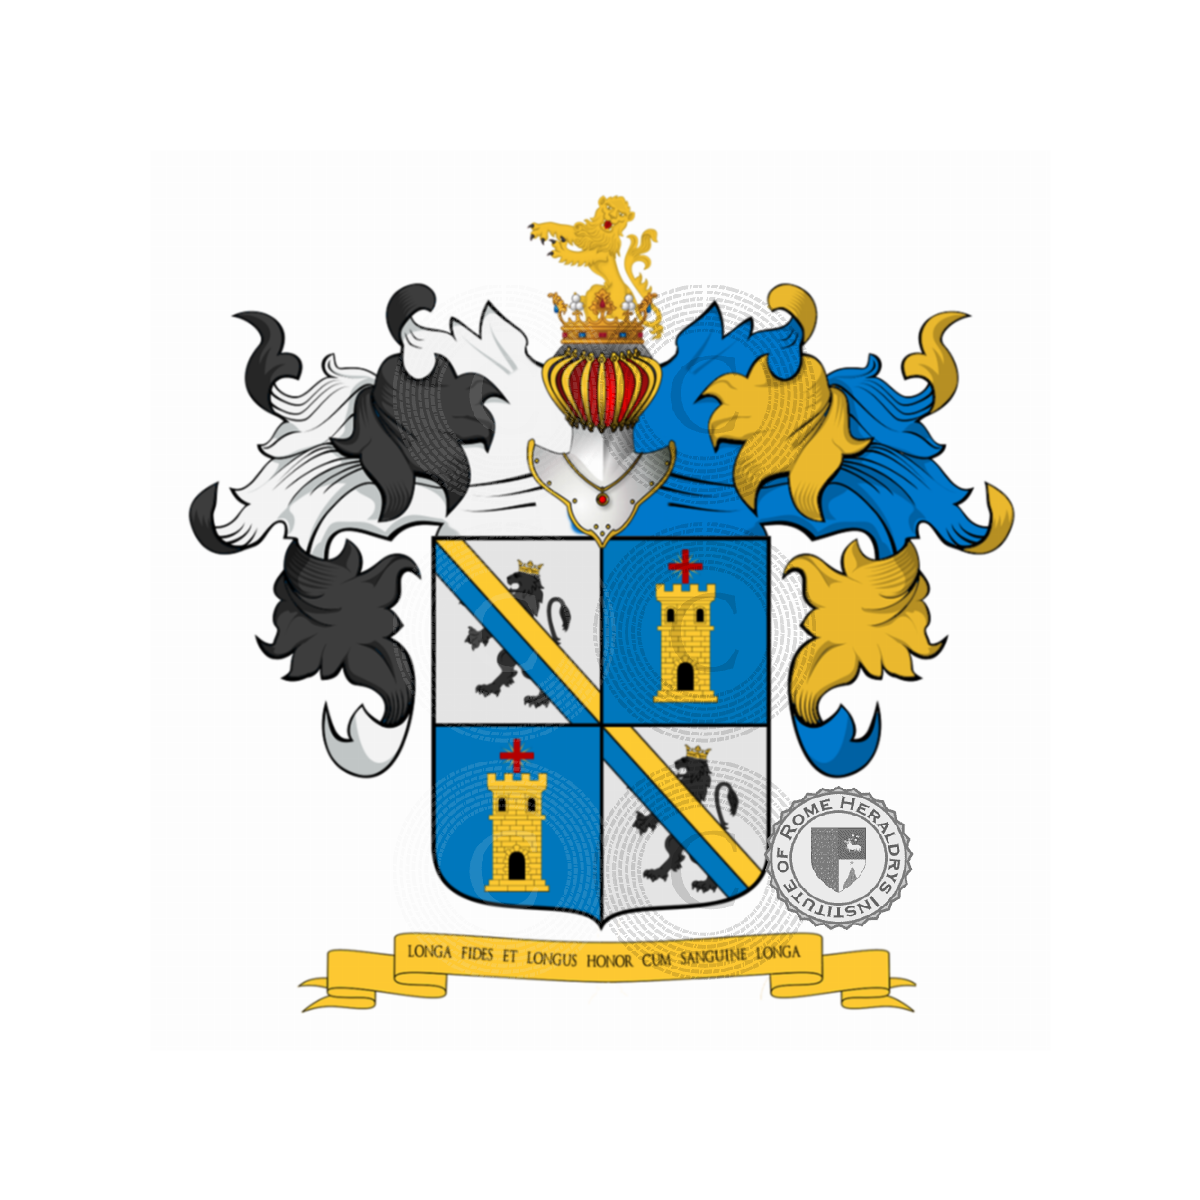 Coat of arms of familyLonghi